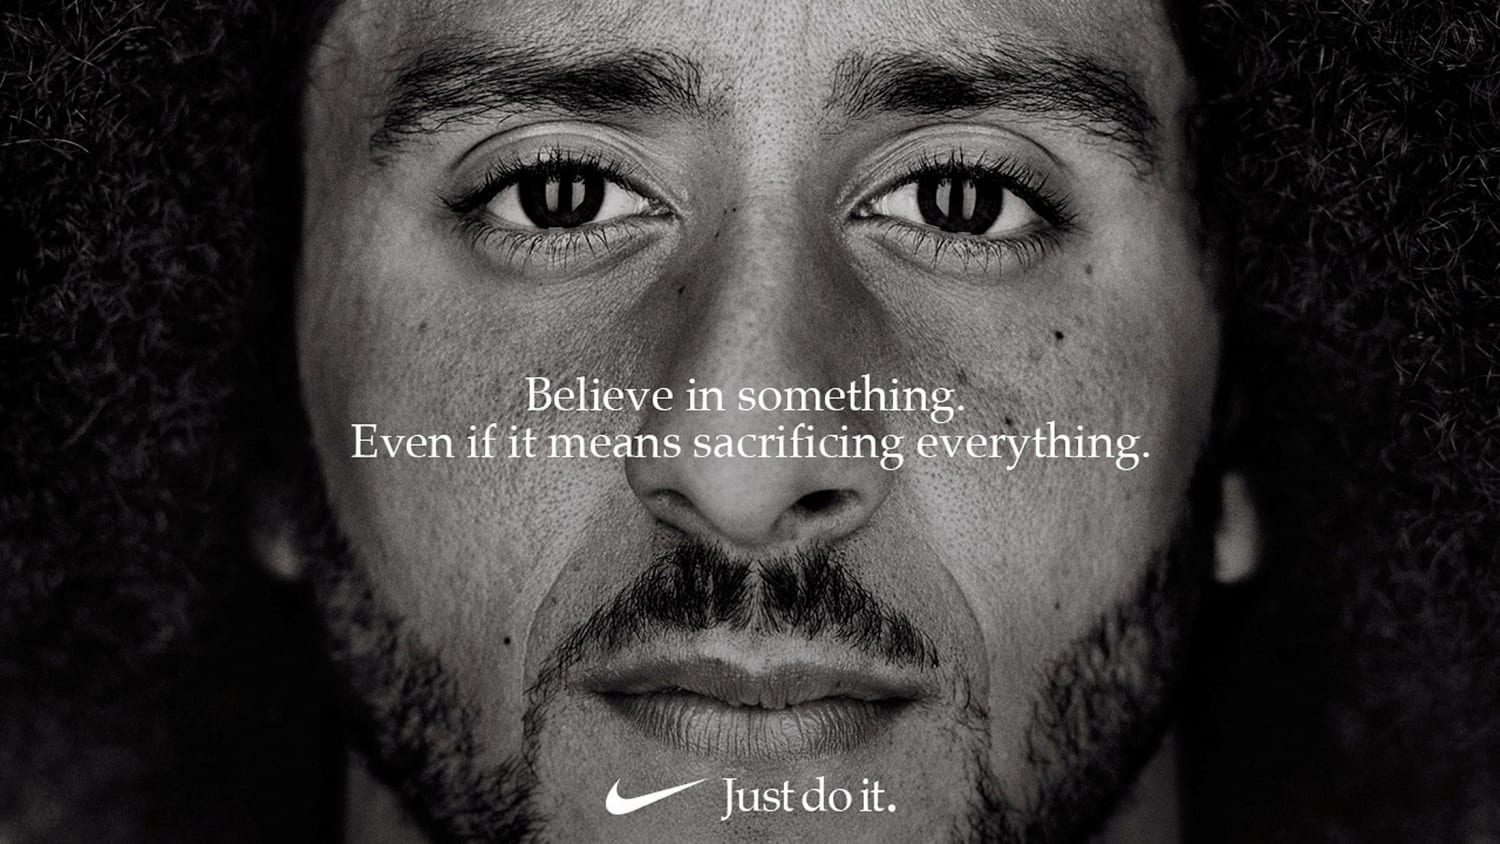 Nike takes heat for new Kaepernick ad 